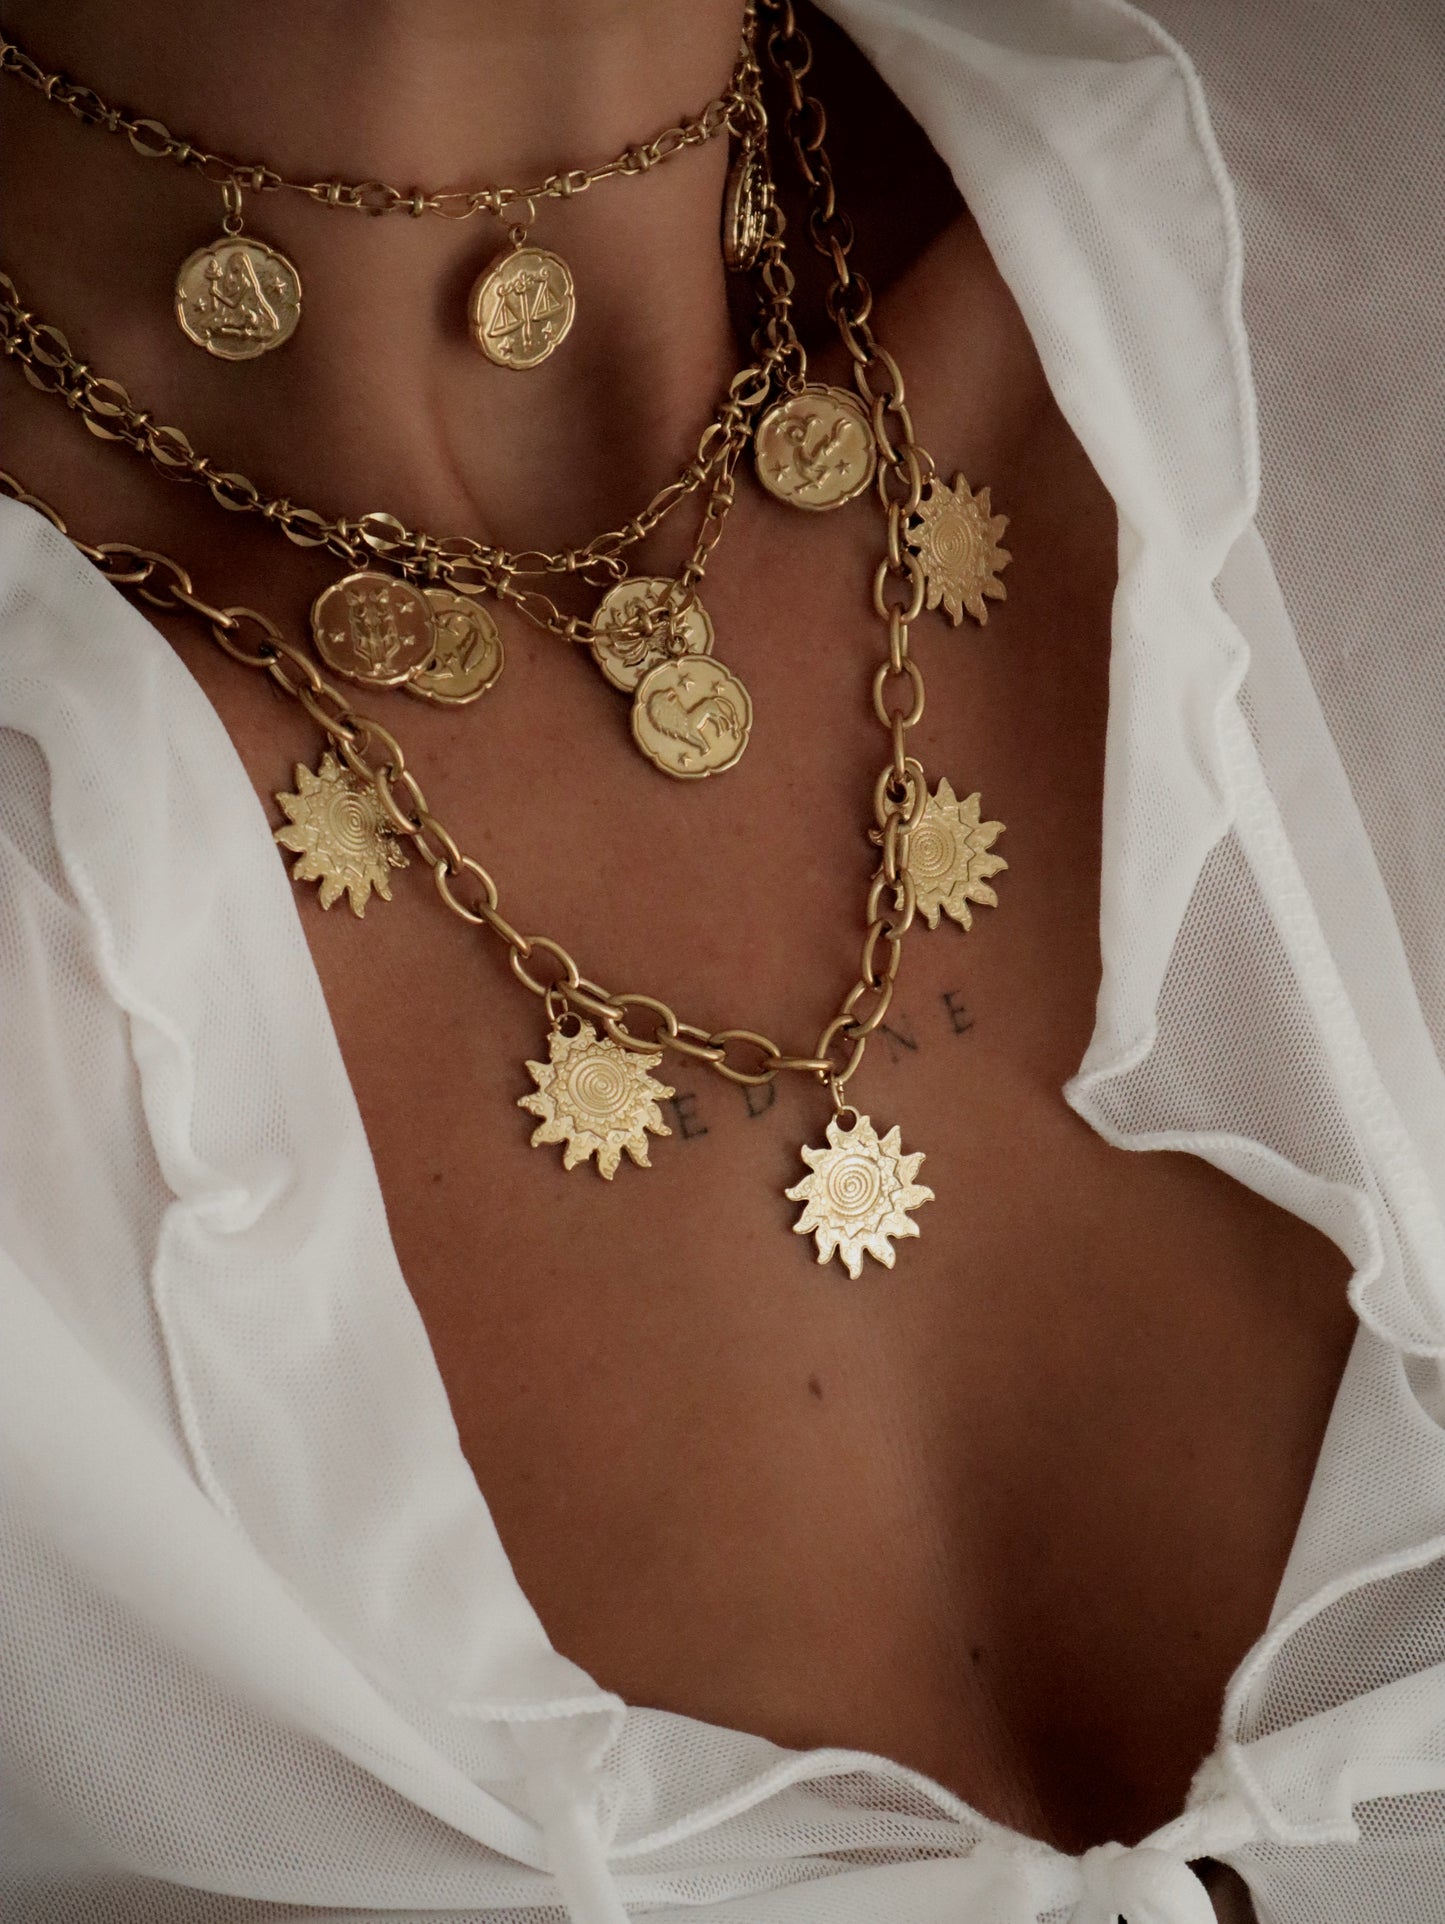 Cosmic necklace